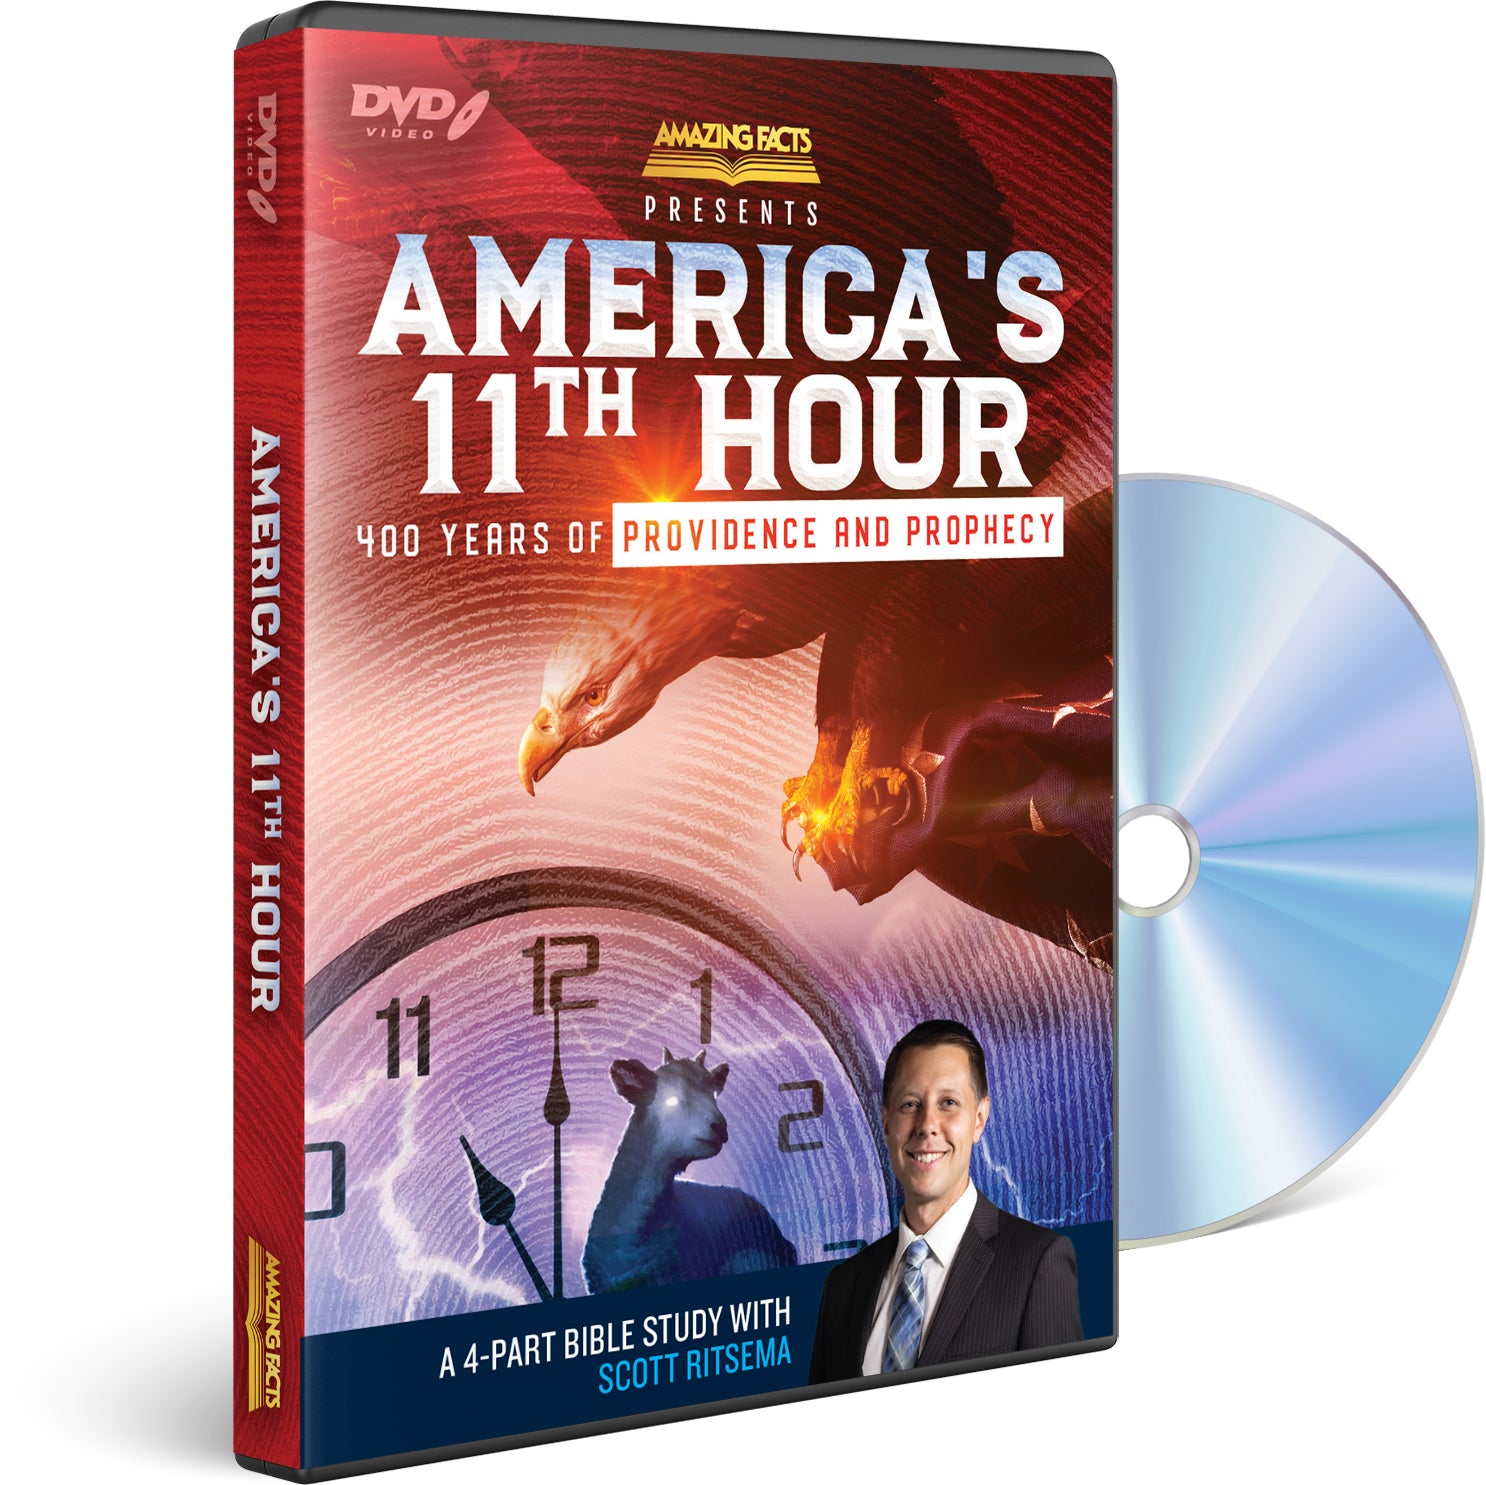 America’s 11th Hour DVD